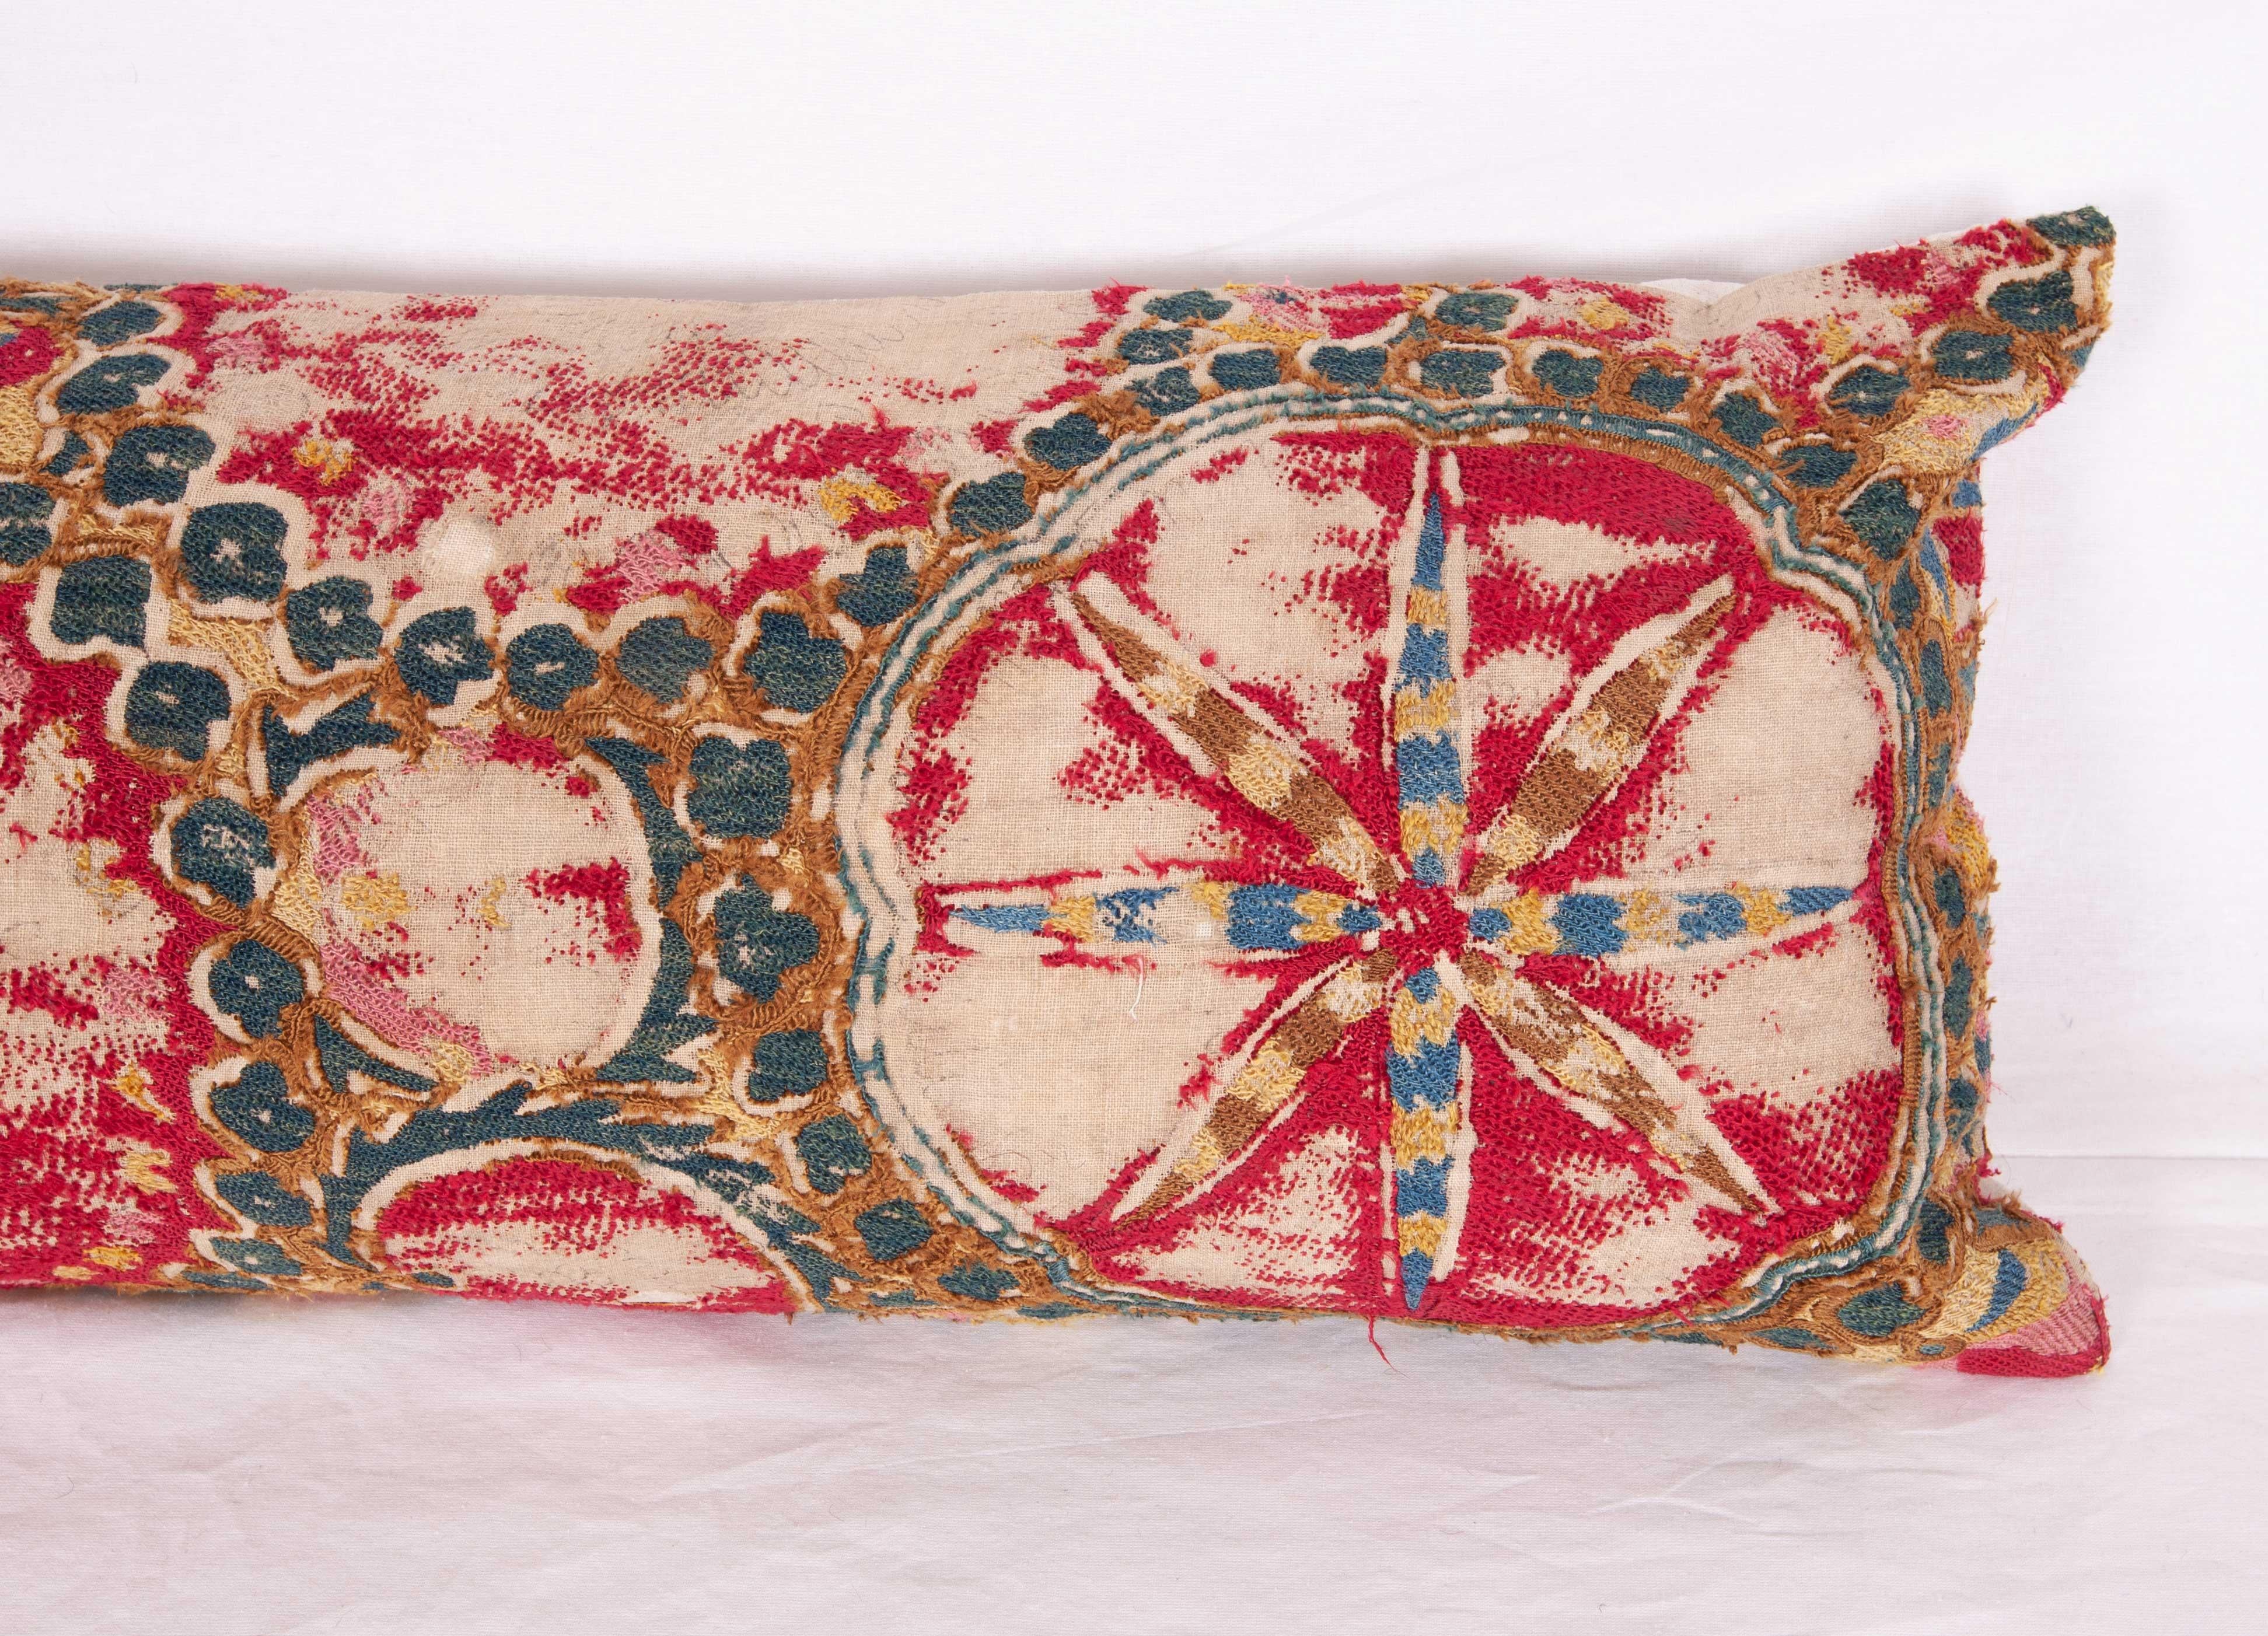 Tajikistani Antique Suzani Pillow or Cushion Cover Fashioned from a 19th Century Suzani